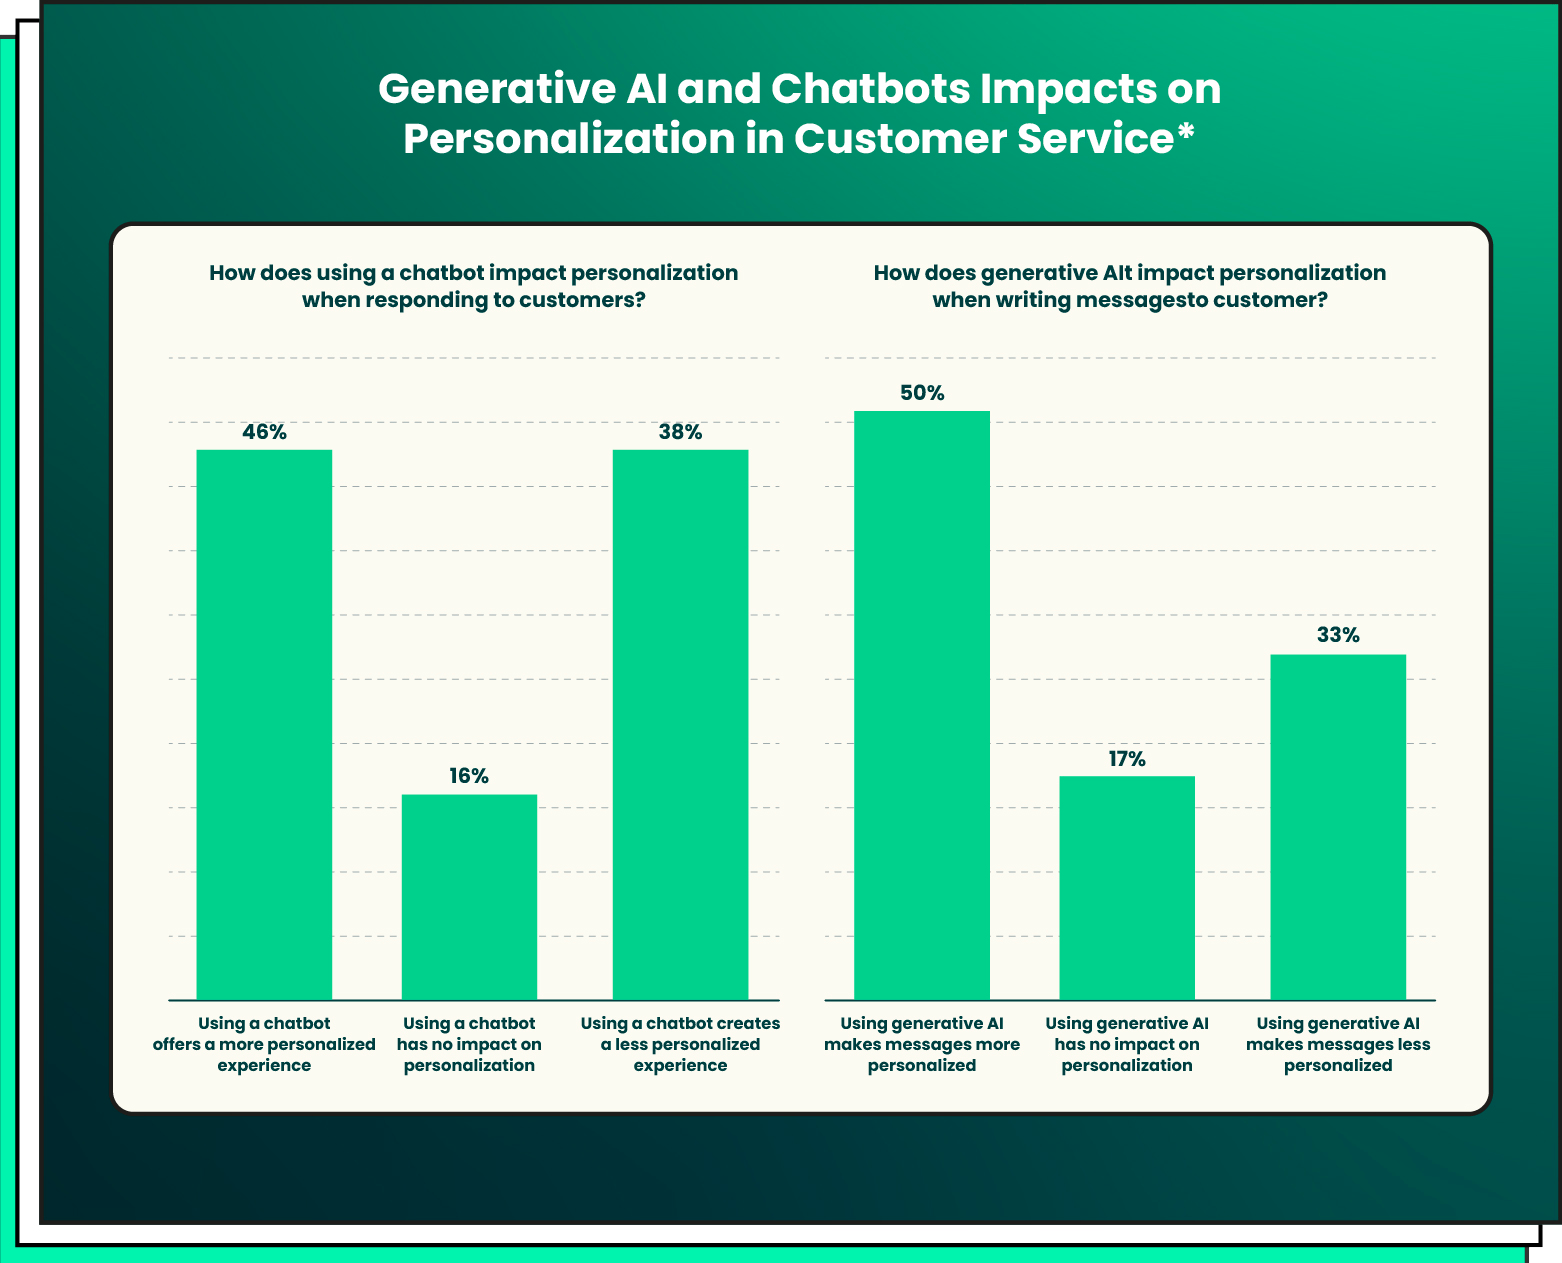 Generative AI and Chatbots Impact on Customer Service